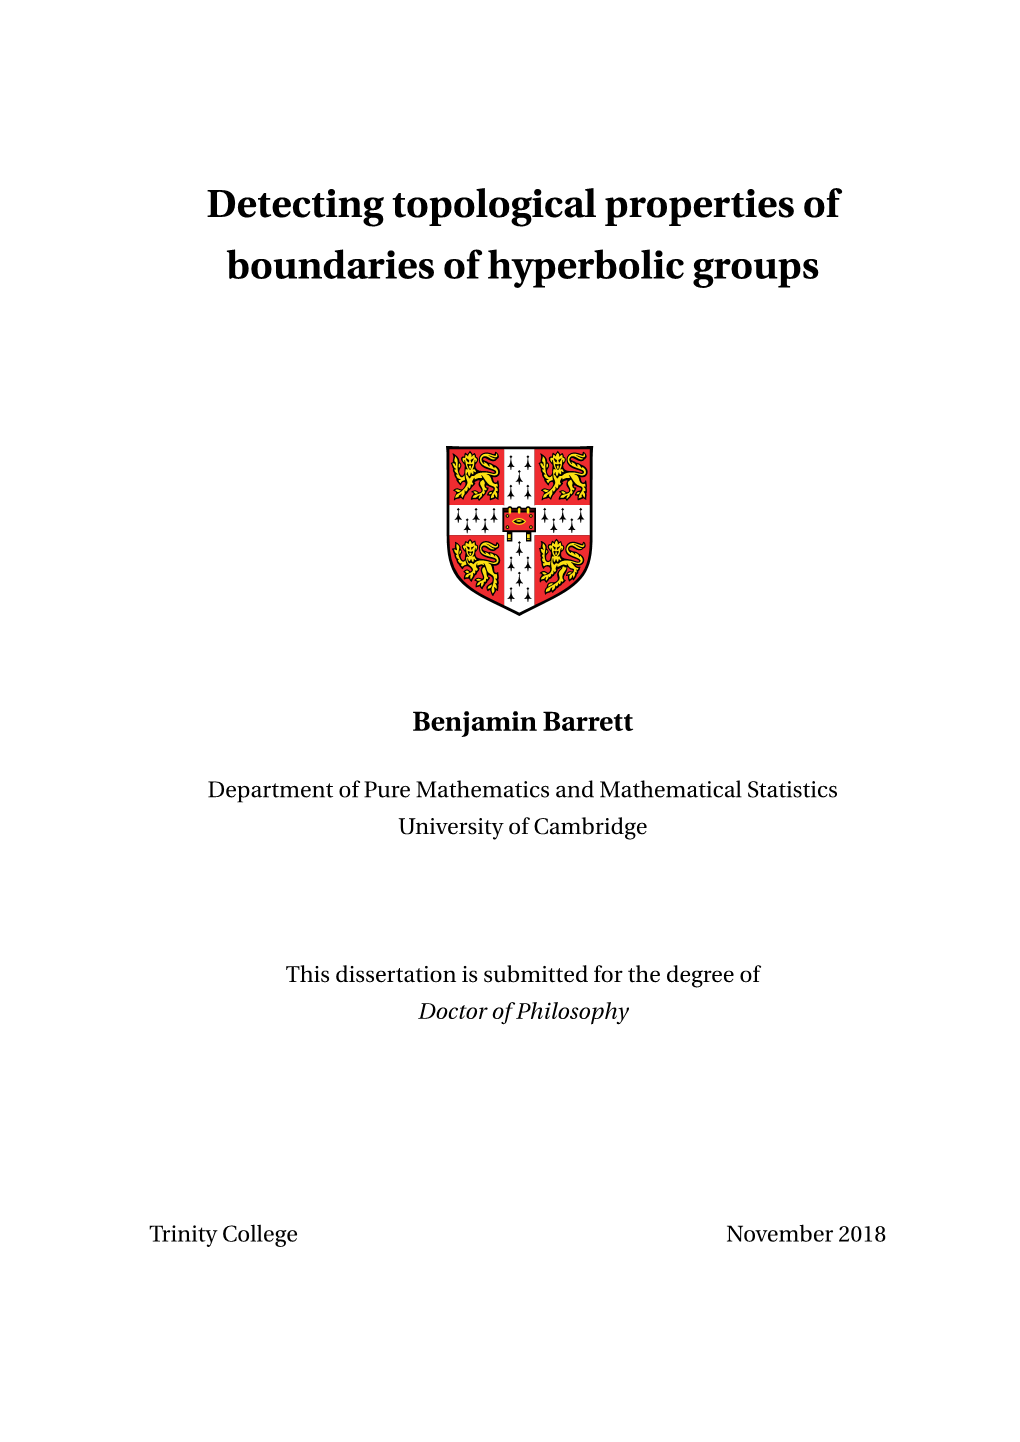 Detecting Topological Properties of Boundaries of Hyperbolic Groups